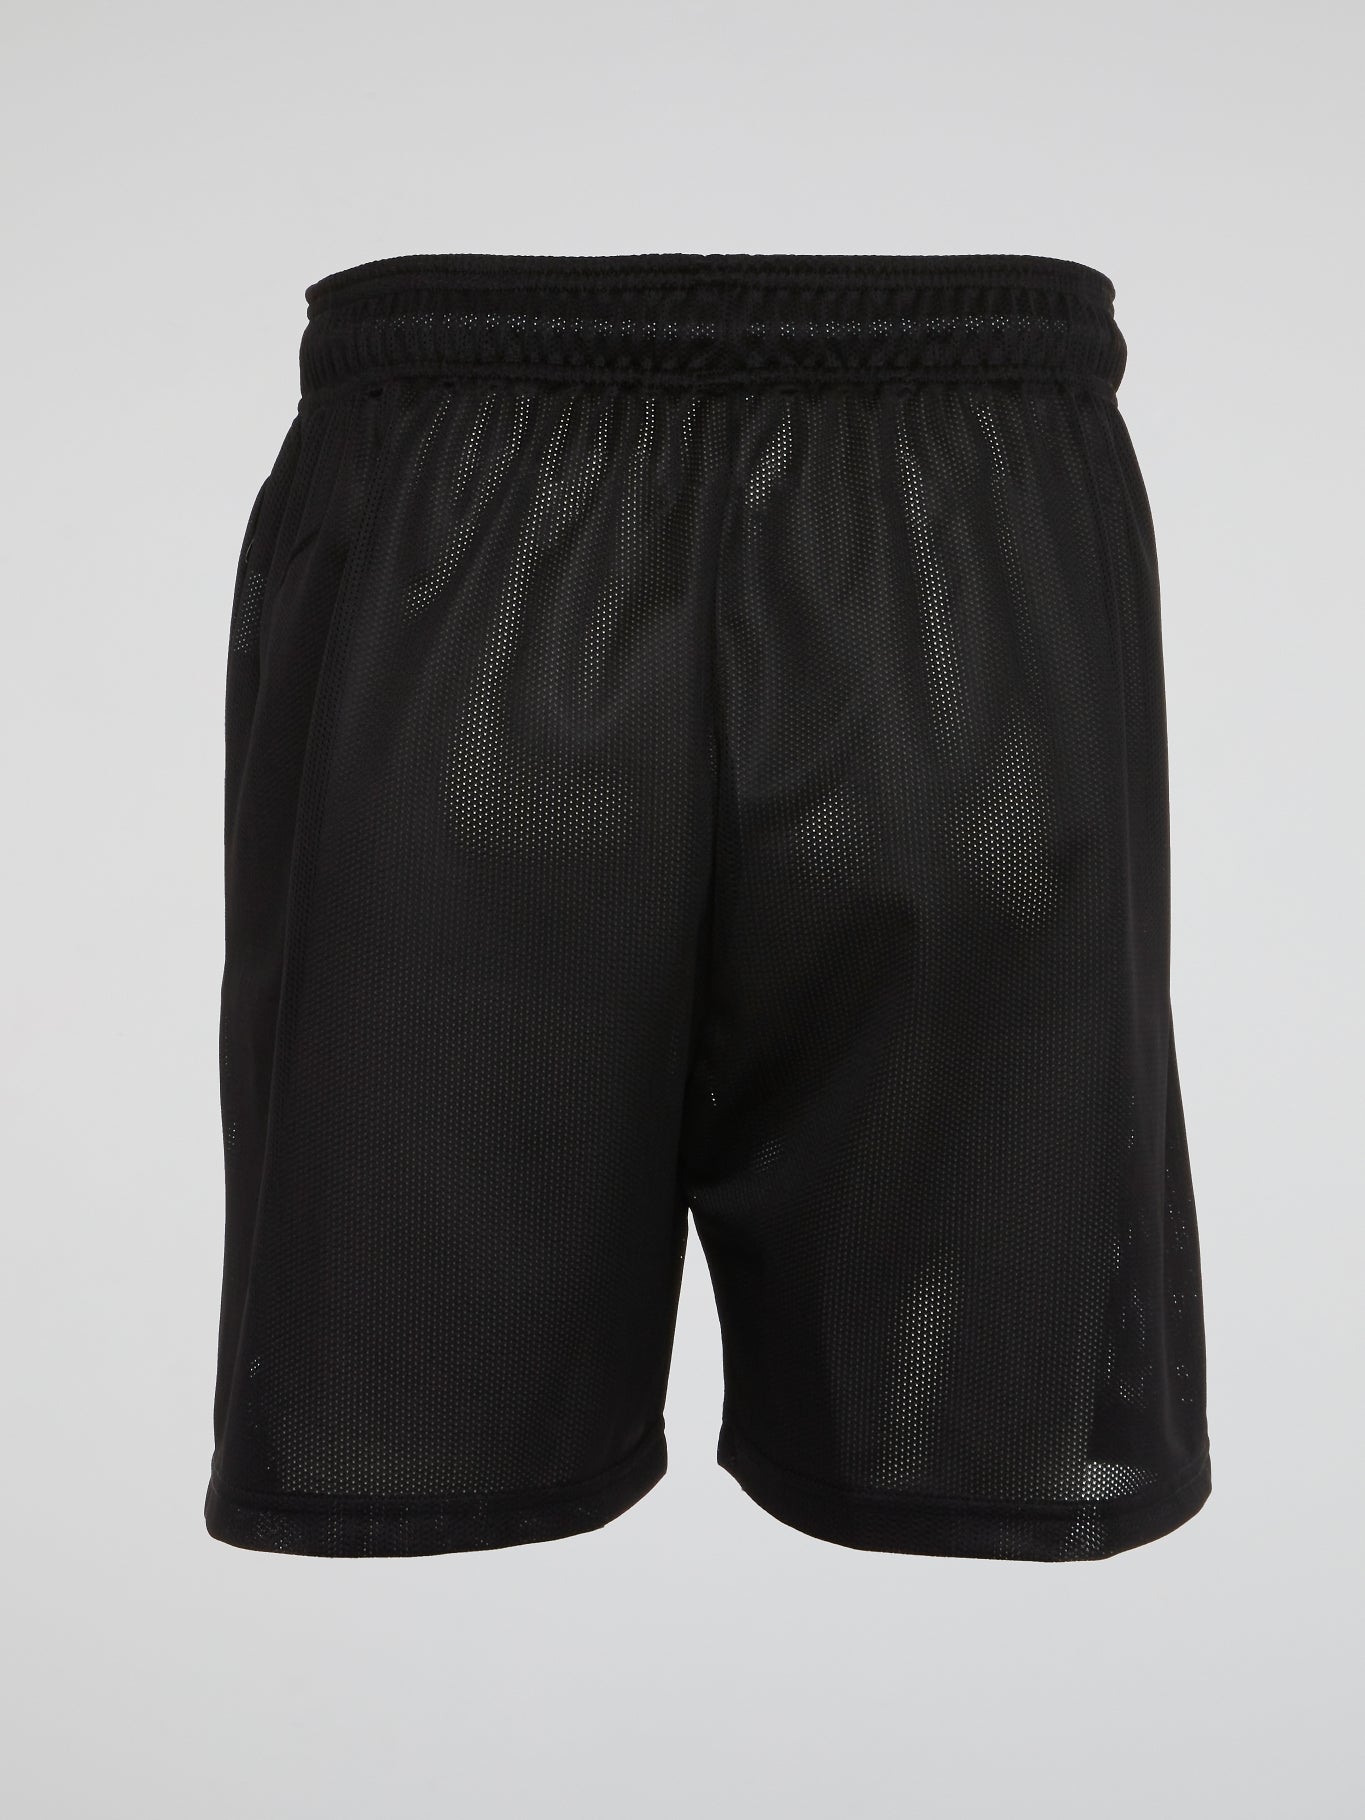 Black Mesh Shorts